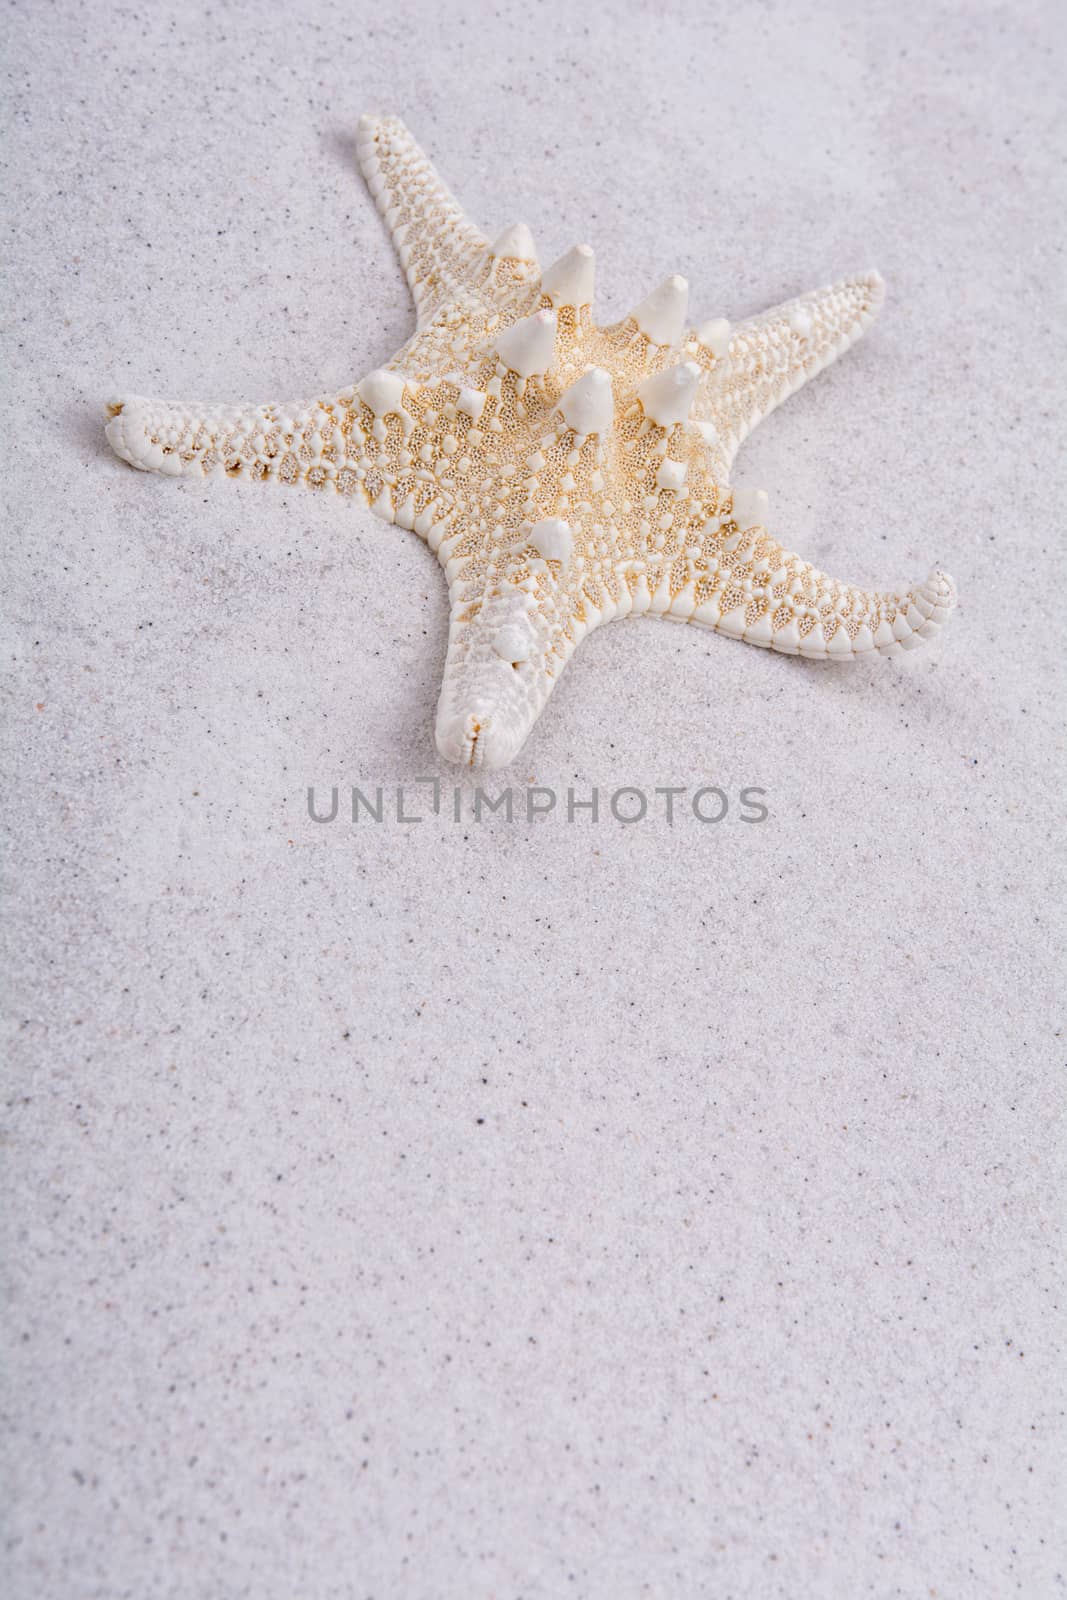 White starfish on a sand background by neryx